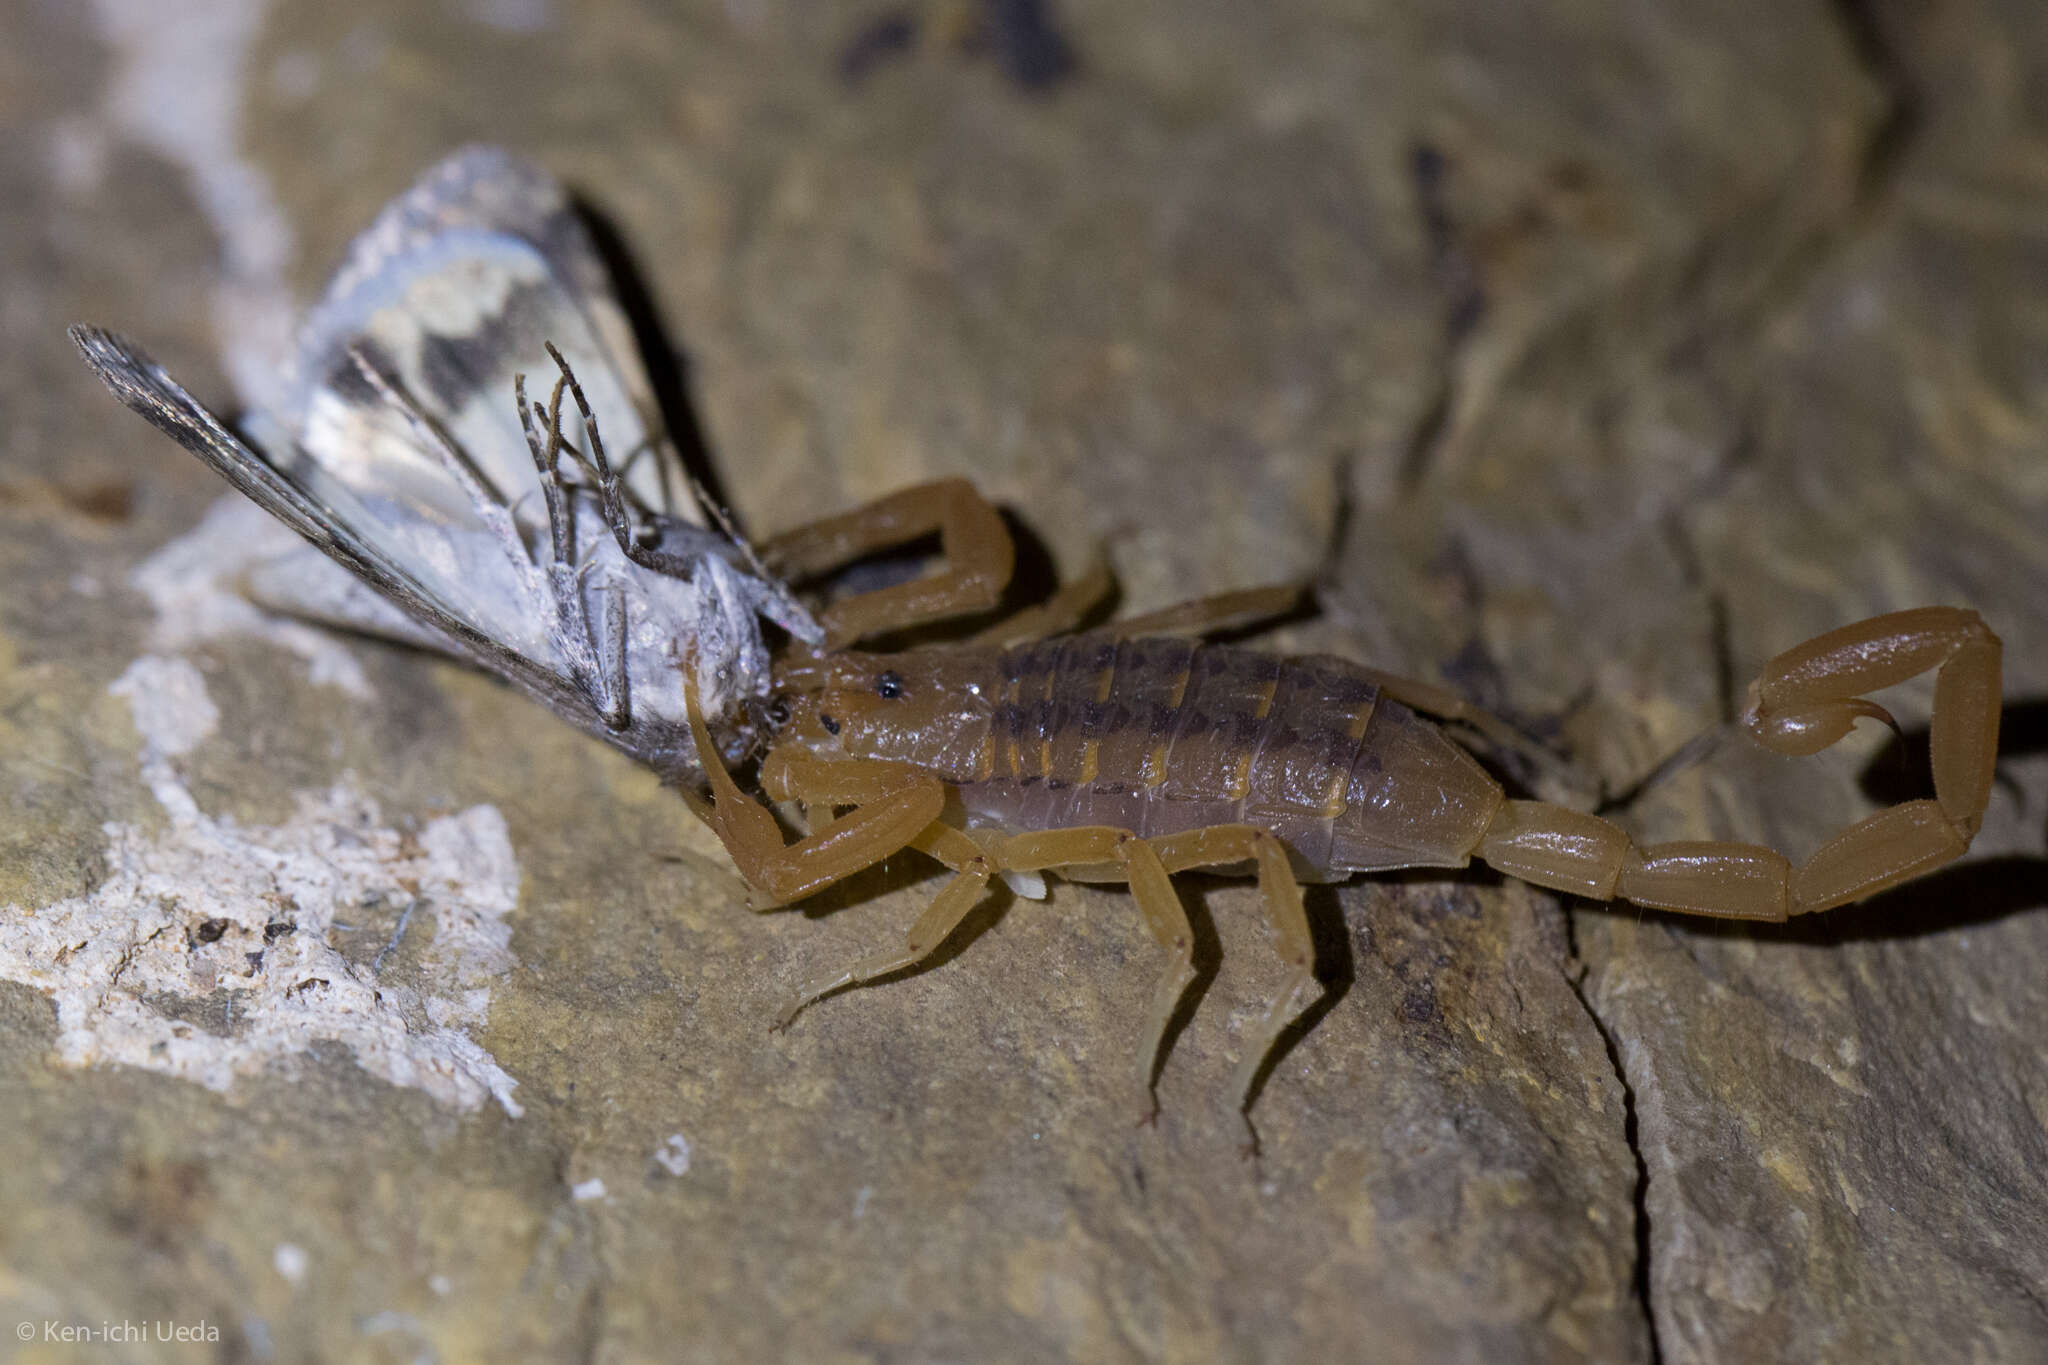 Image of Arizona Bark Scorpion